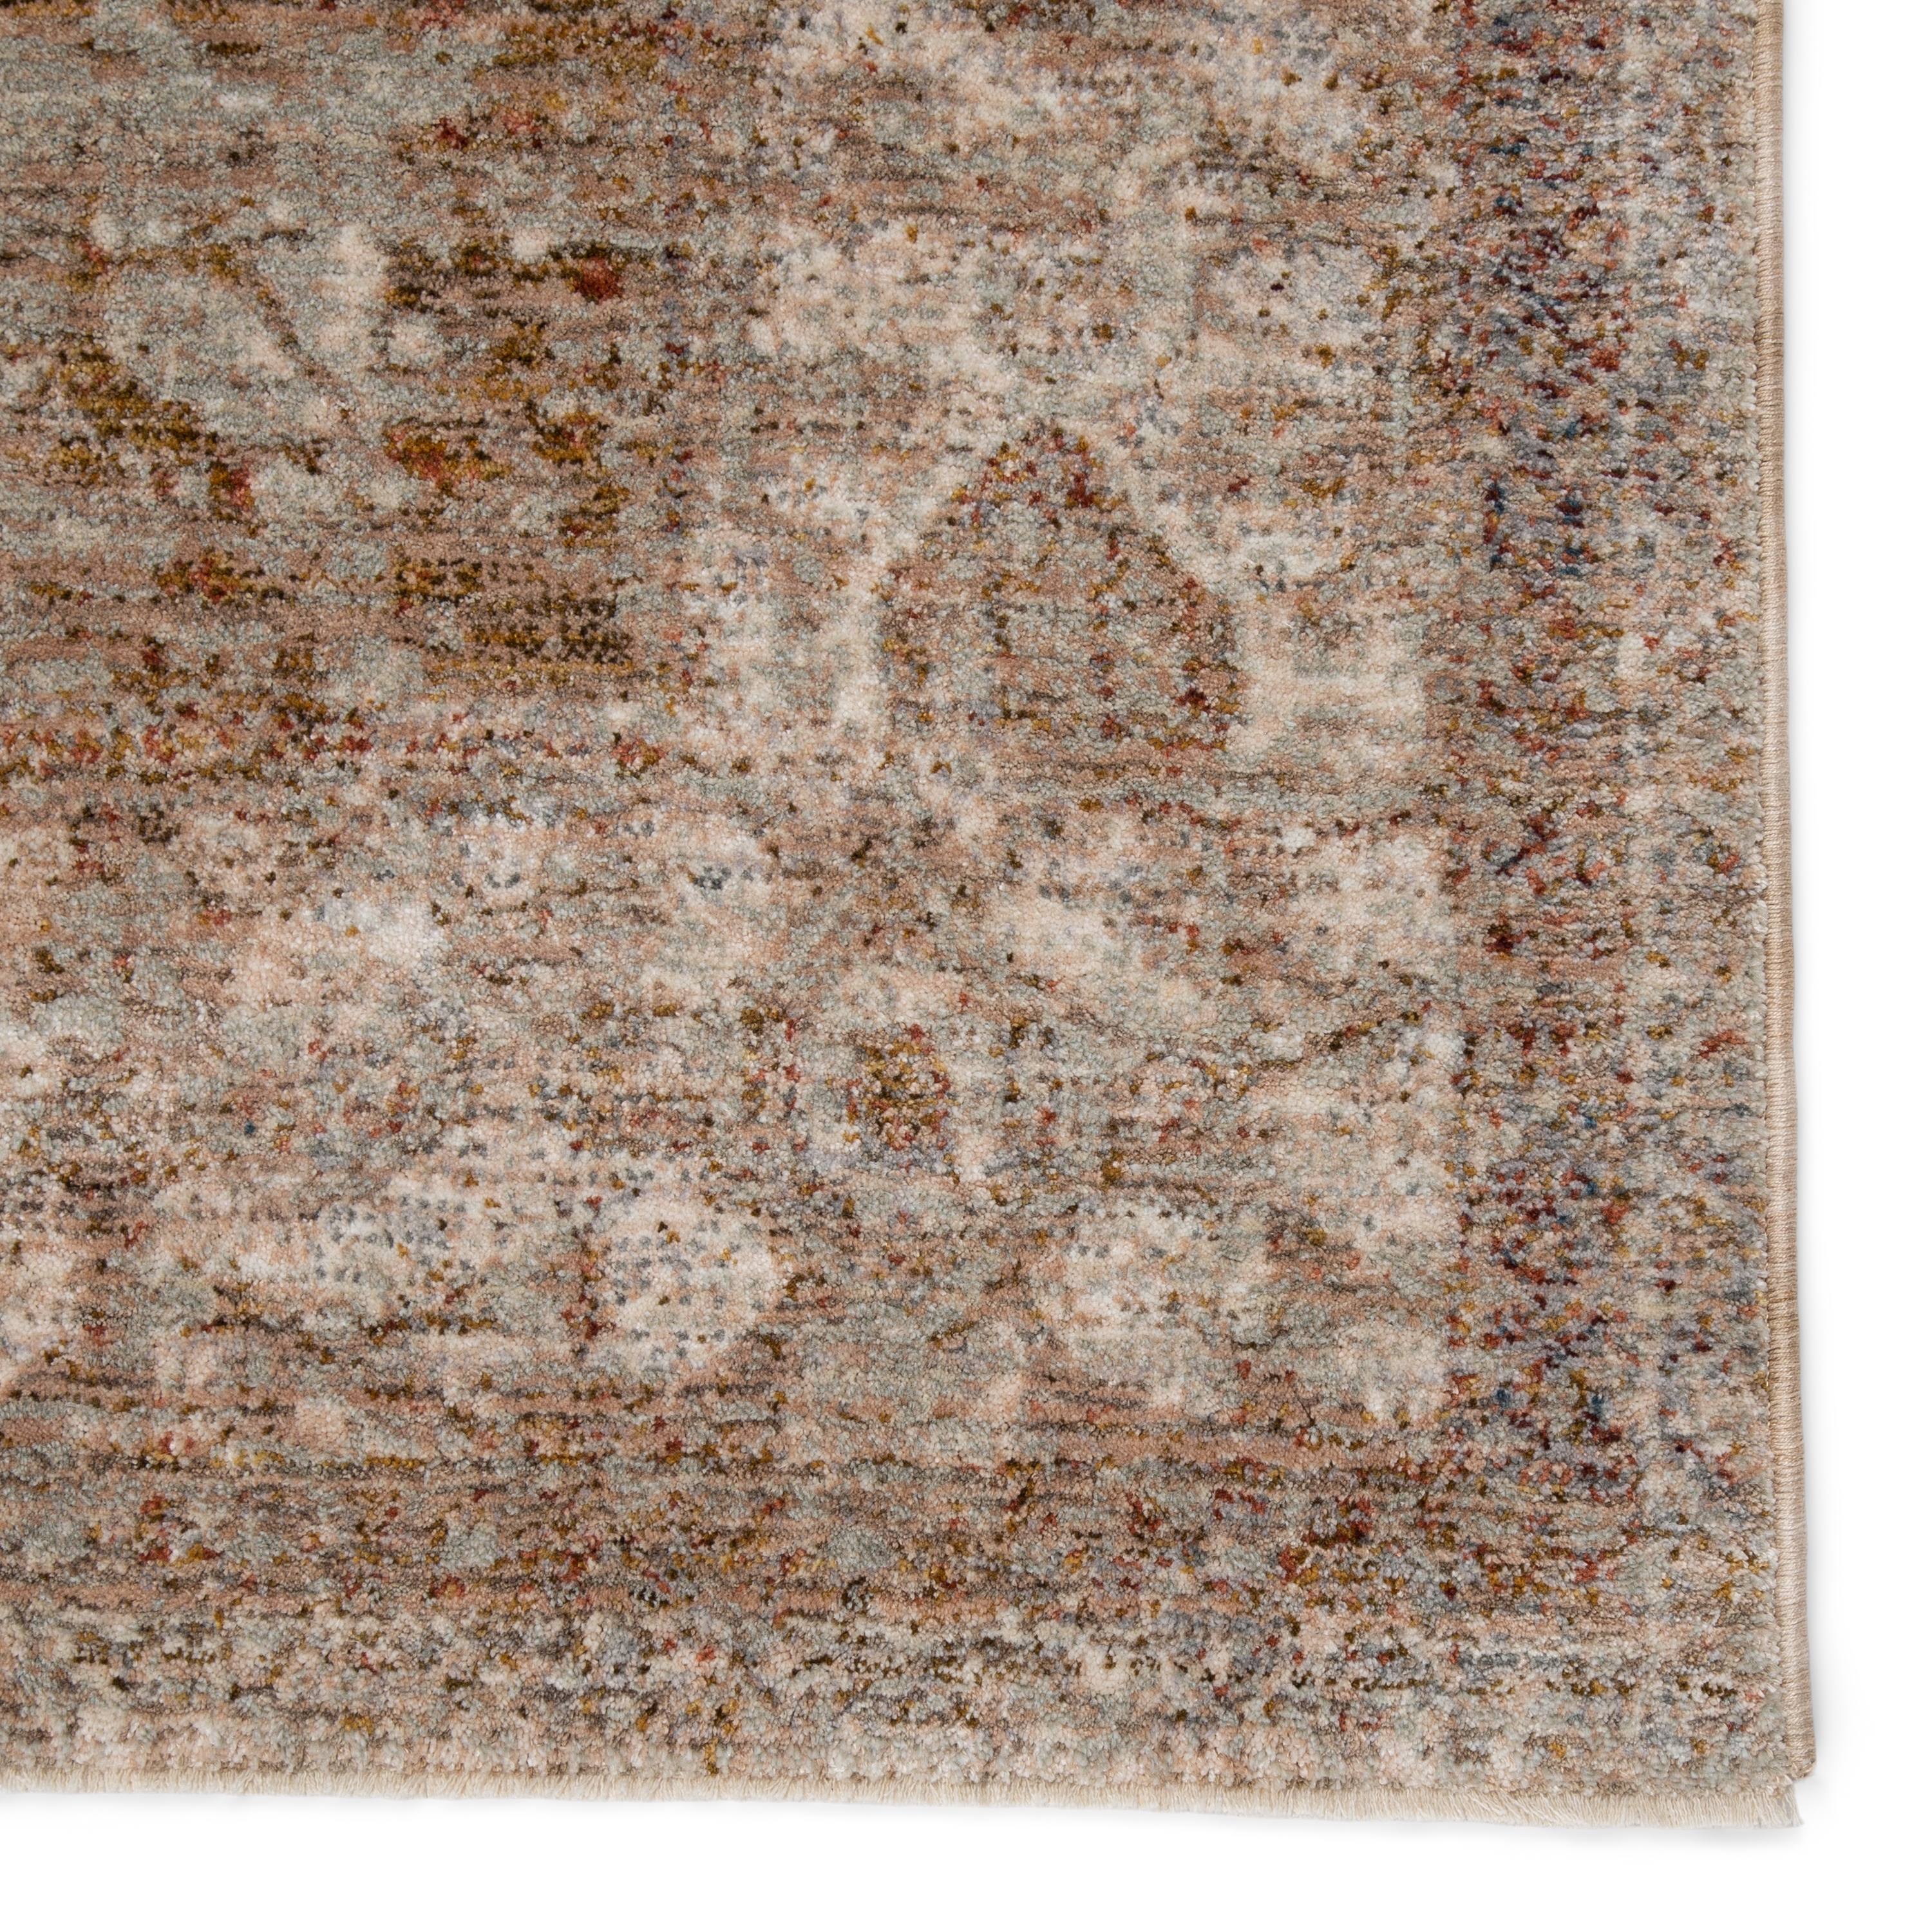 Beatty Medallion Area Rug, Tan & Rust, 8' x 10' - Image 3